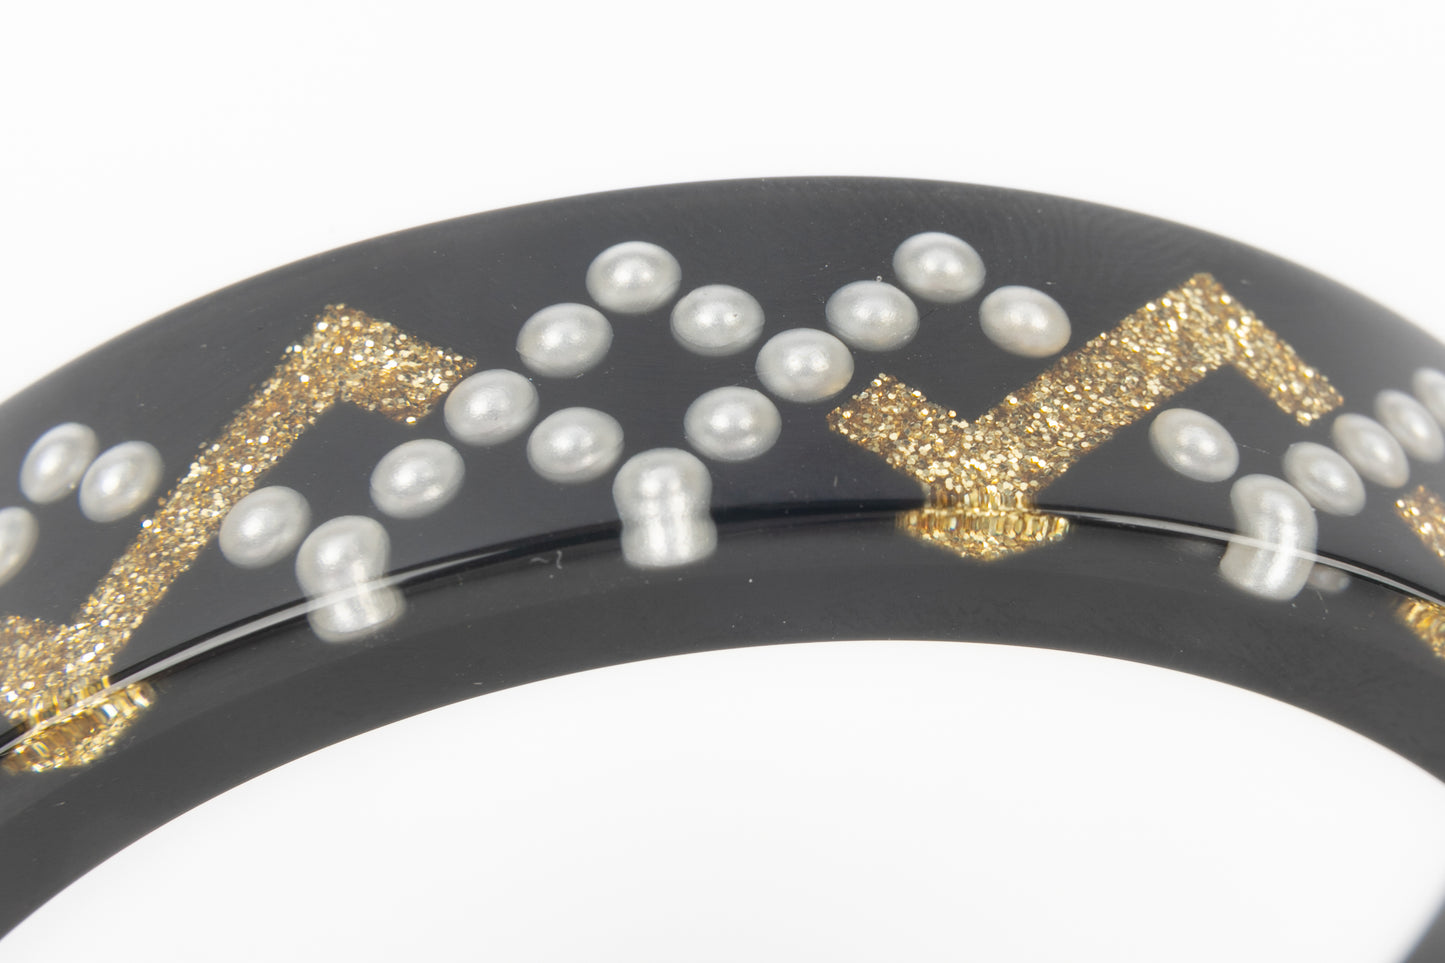 Bracelet Chanel 2018